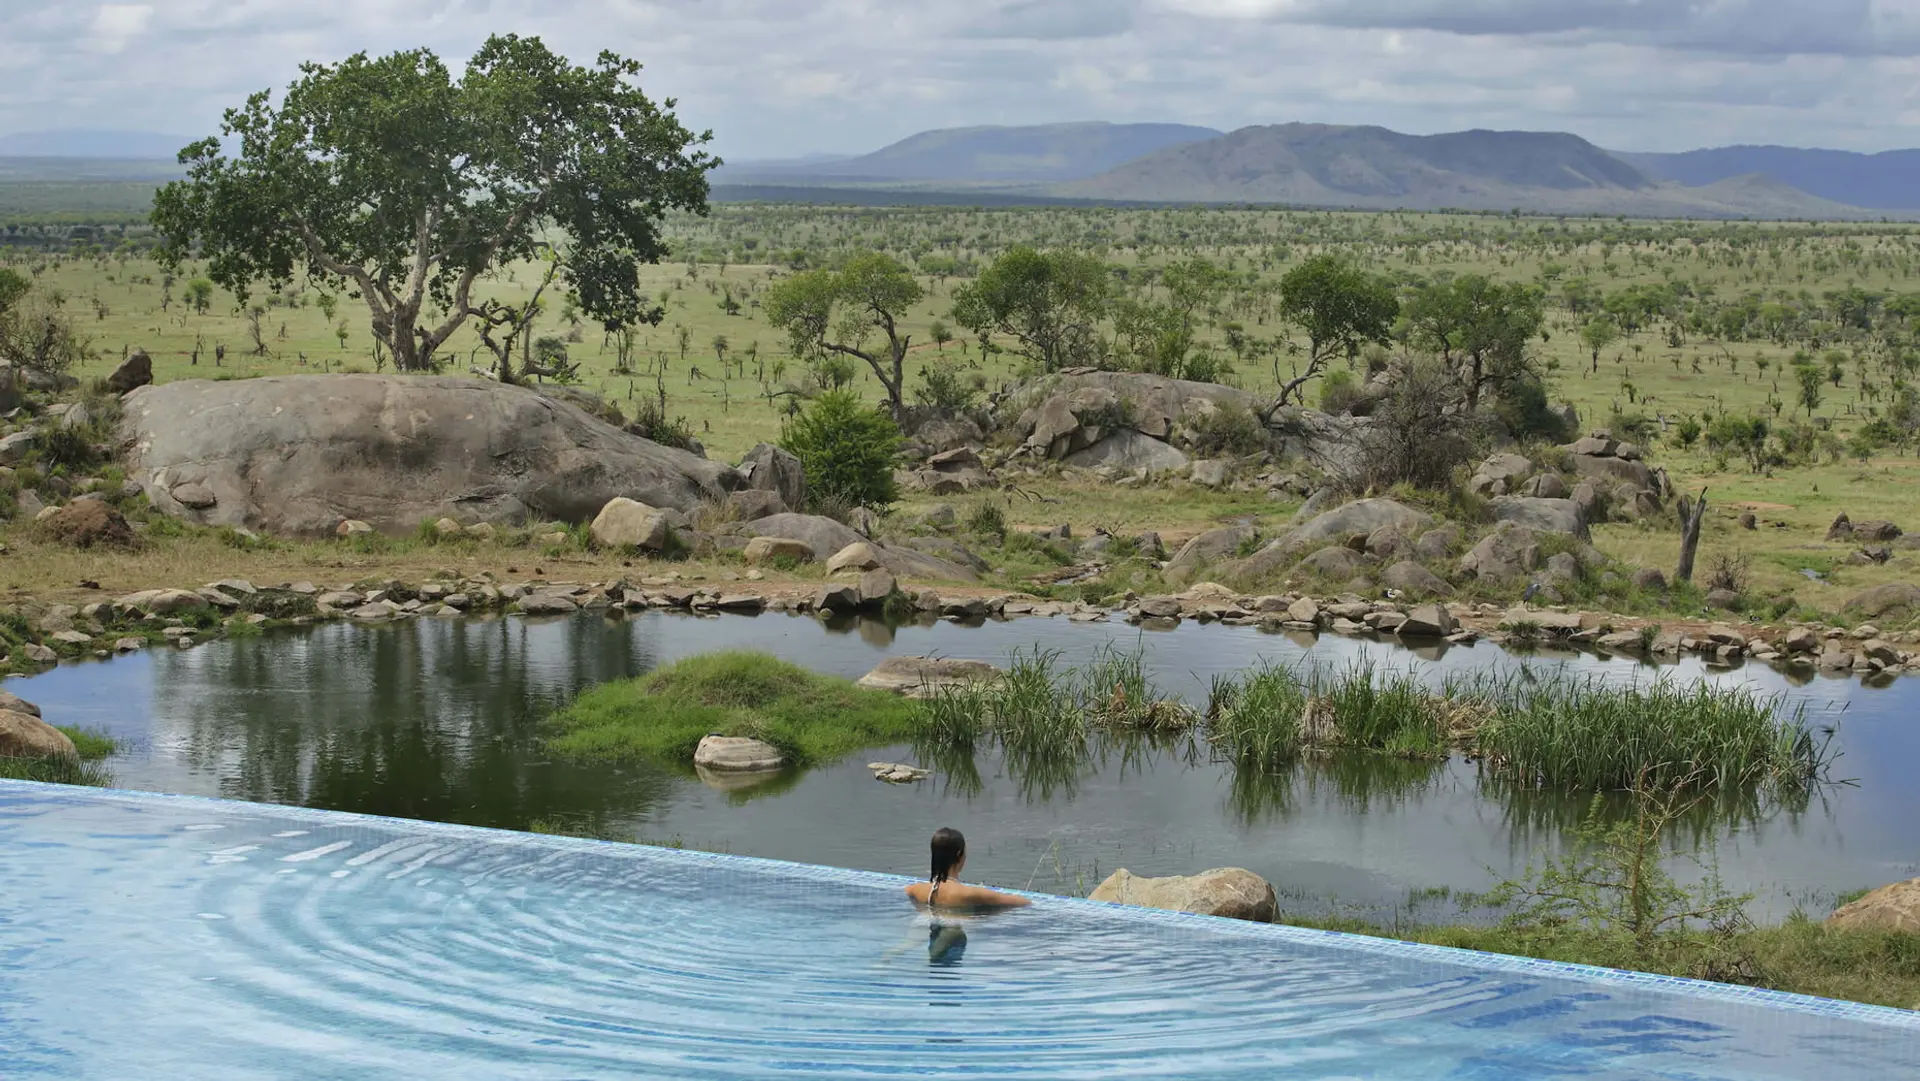 Hotel review Service & Facilities' - Four Seasons Safari Lodge Serengeti - 7